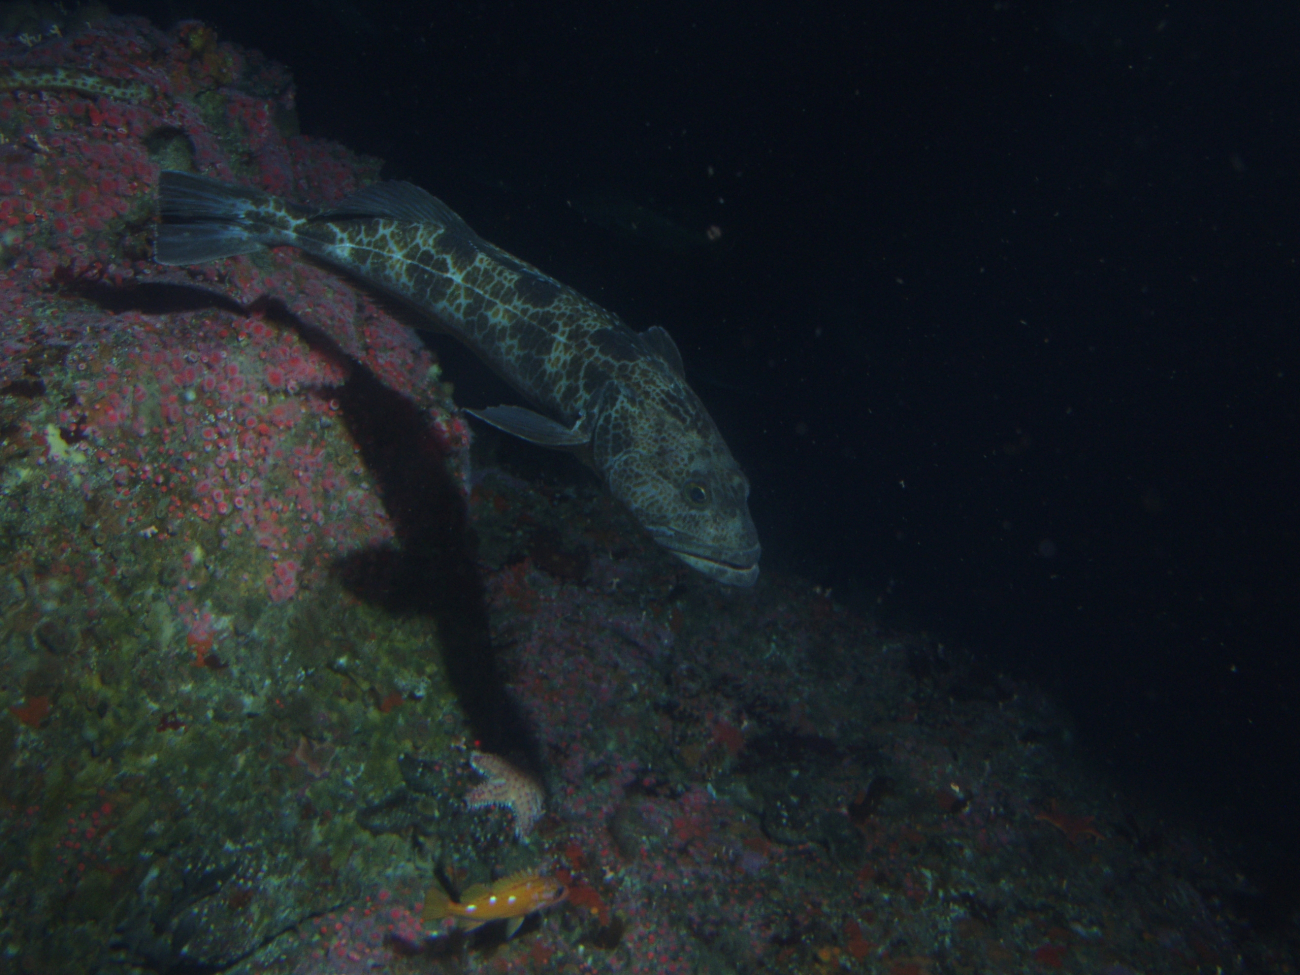 Lingcod (Ophiodon elongatus) on rocky reef habitatat 50 meters